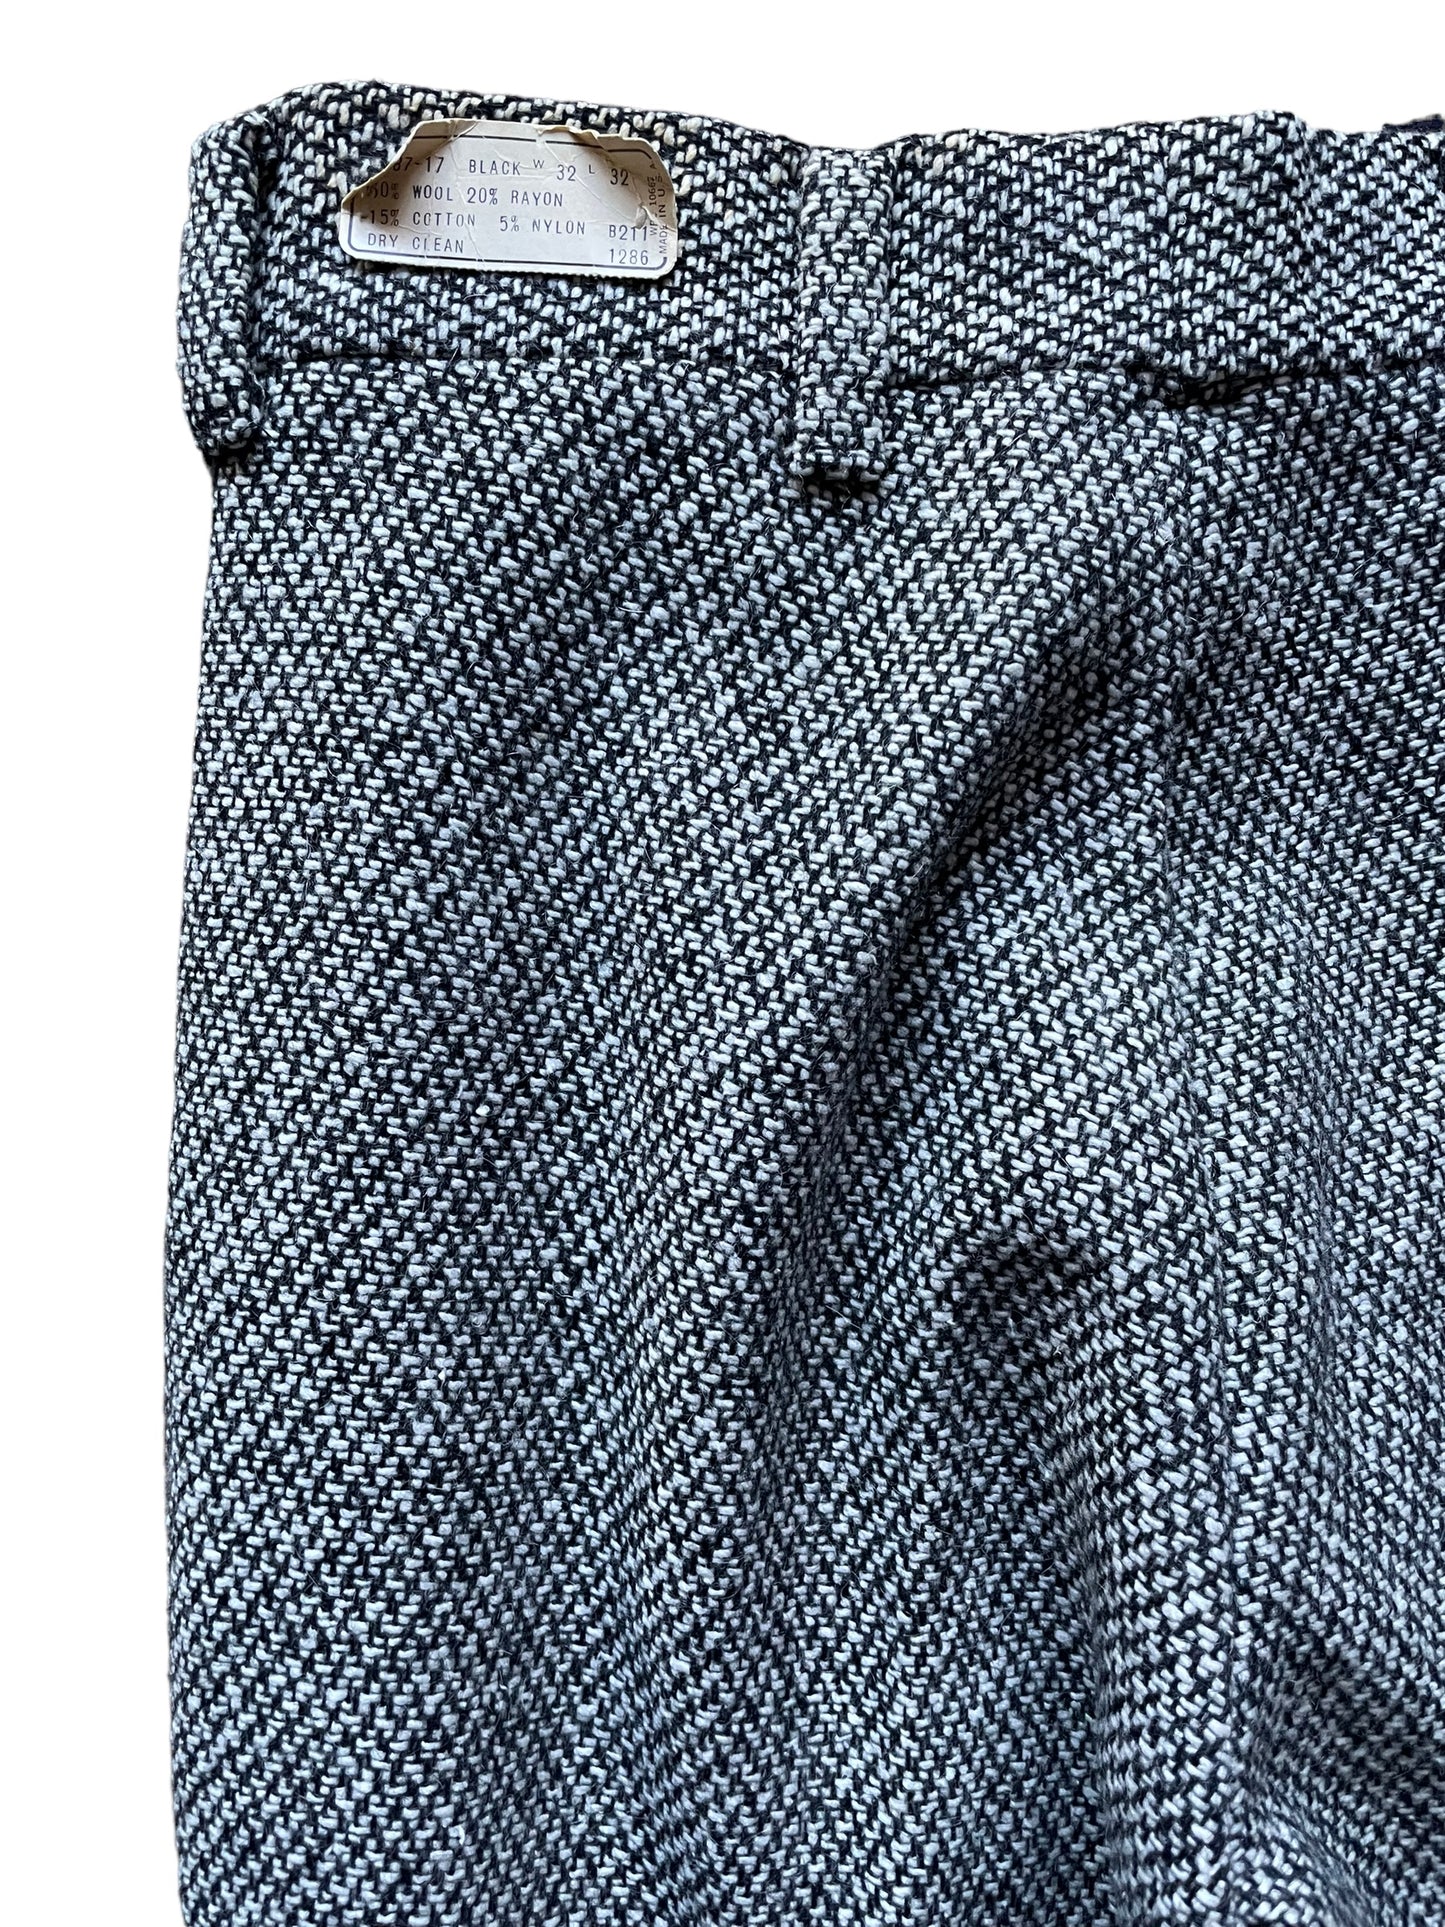 Back left side view of Vintage 1970s Deadstock Wool Blend Tweed Trousers W30 | Barn Owl Vintage Seattle | Vintage Trousers